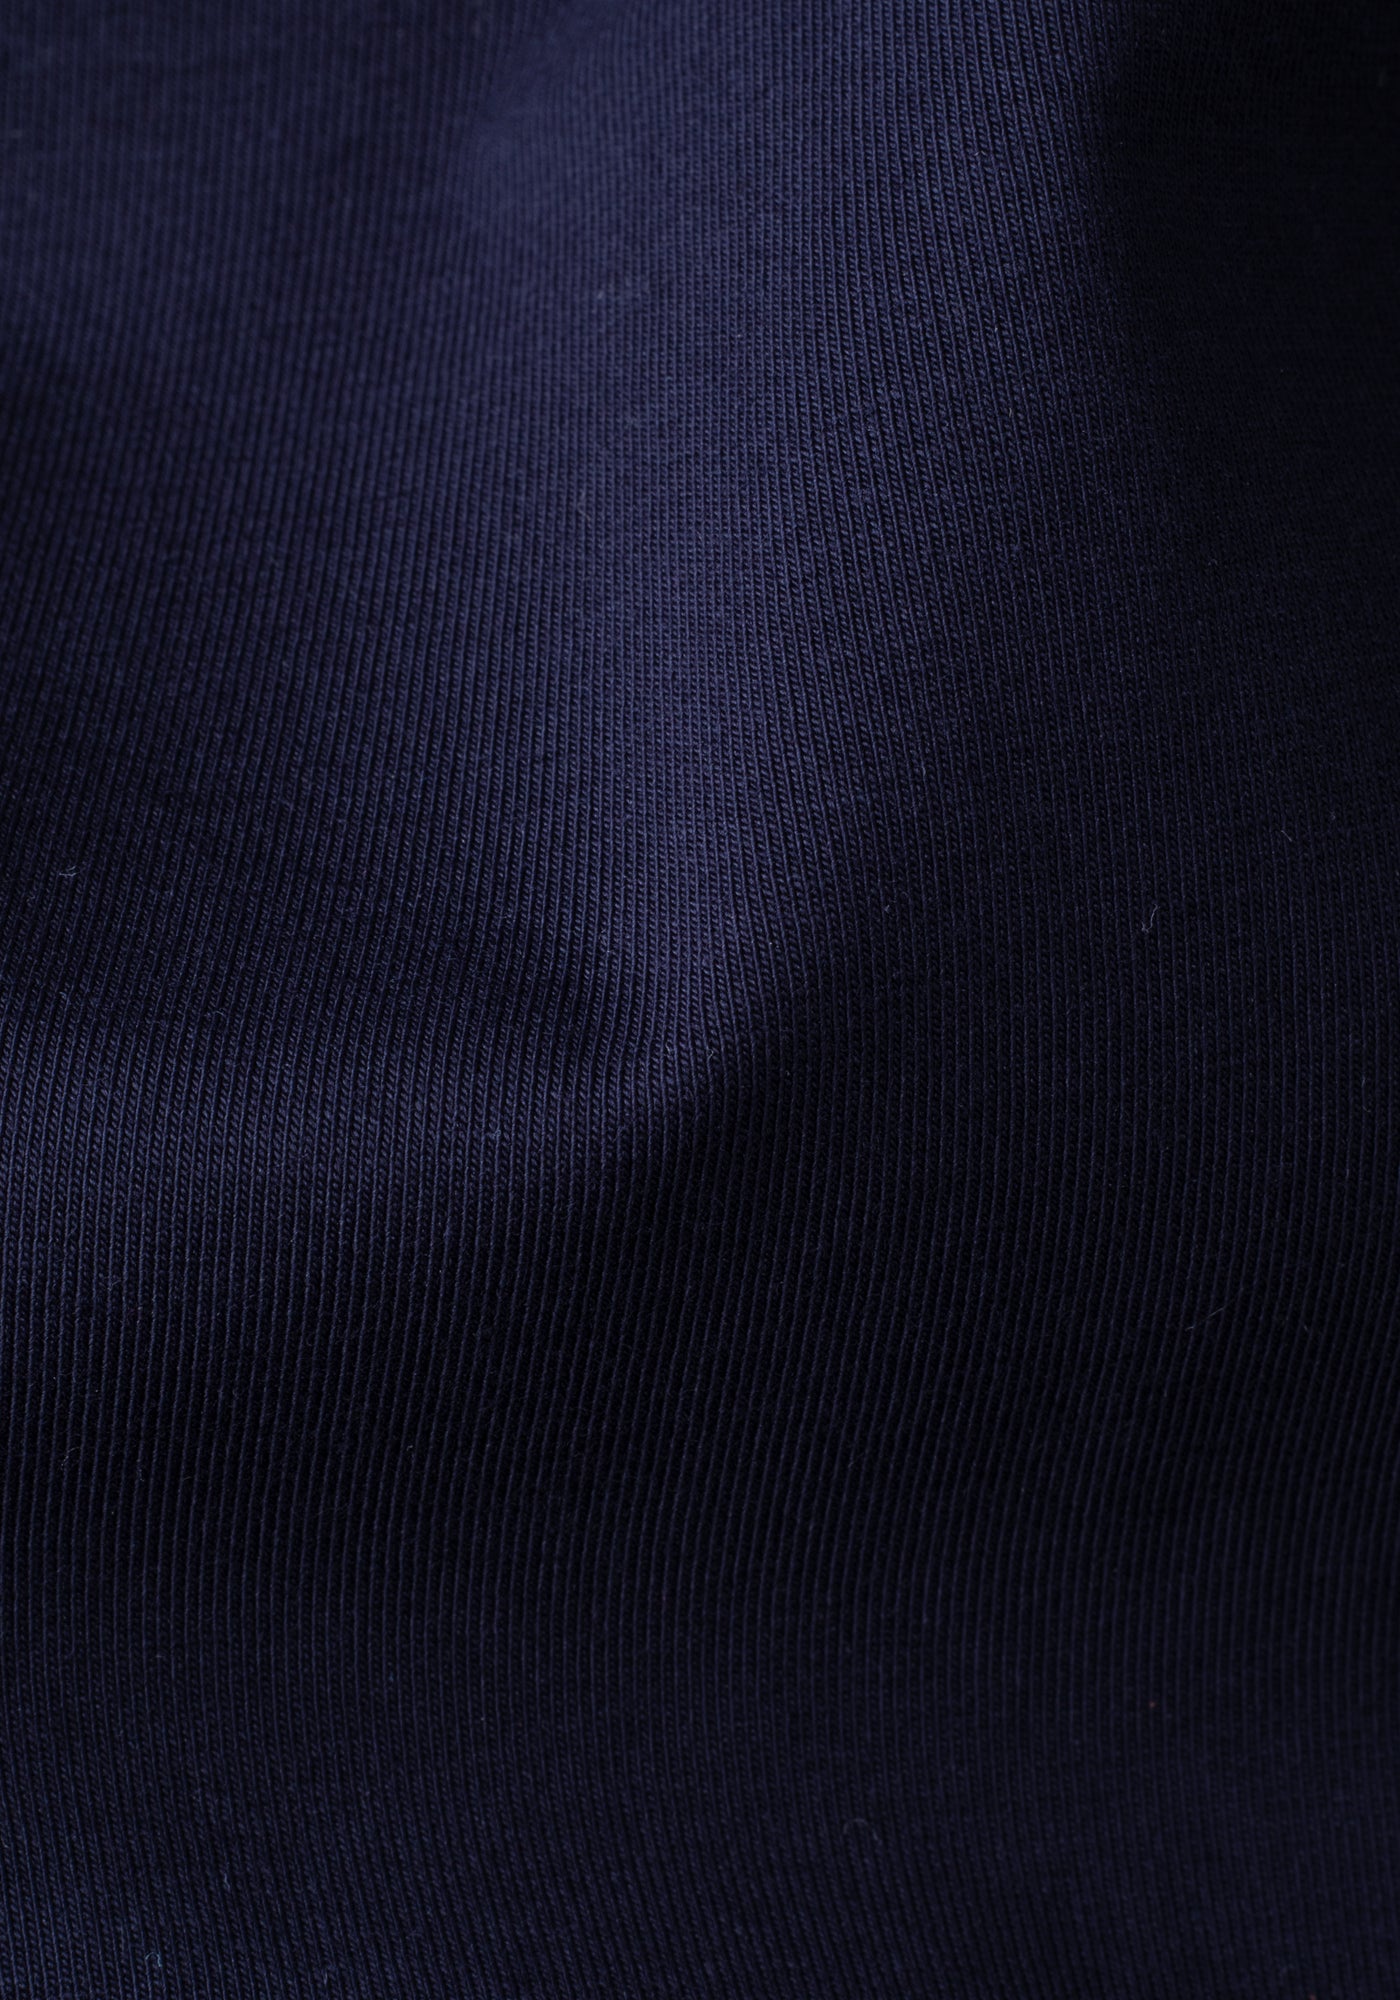 Arctic Navy Cotton Undershirt - Short Sleeve